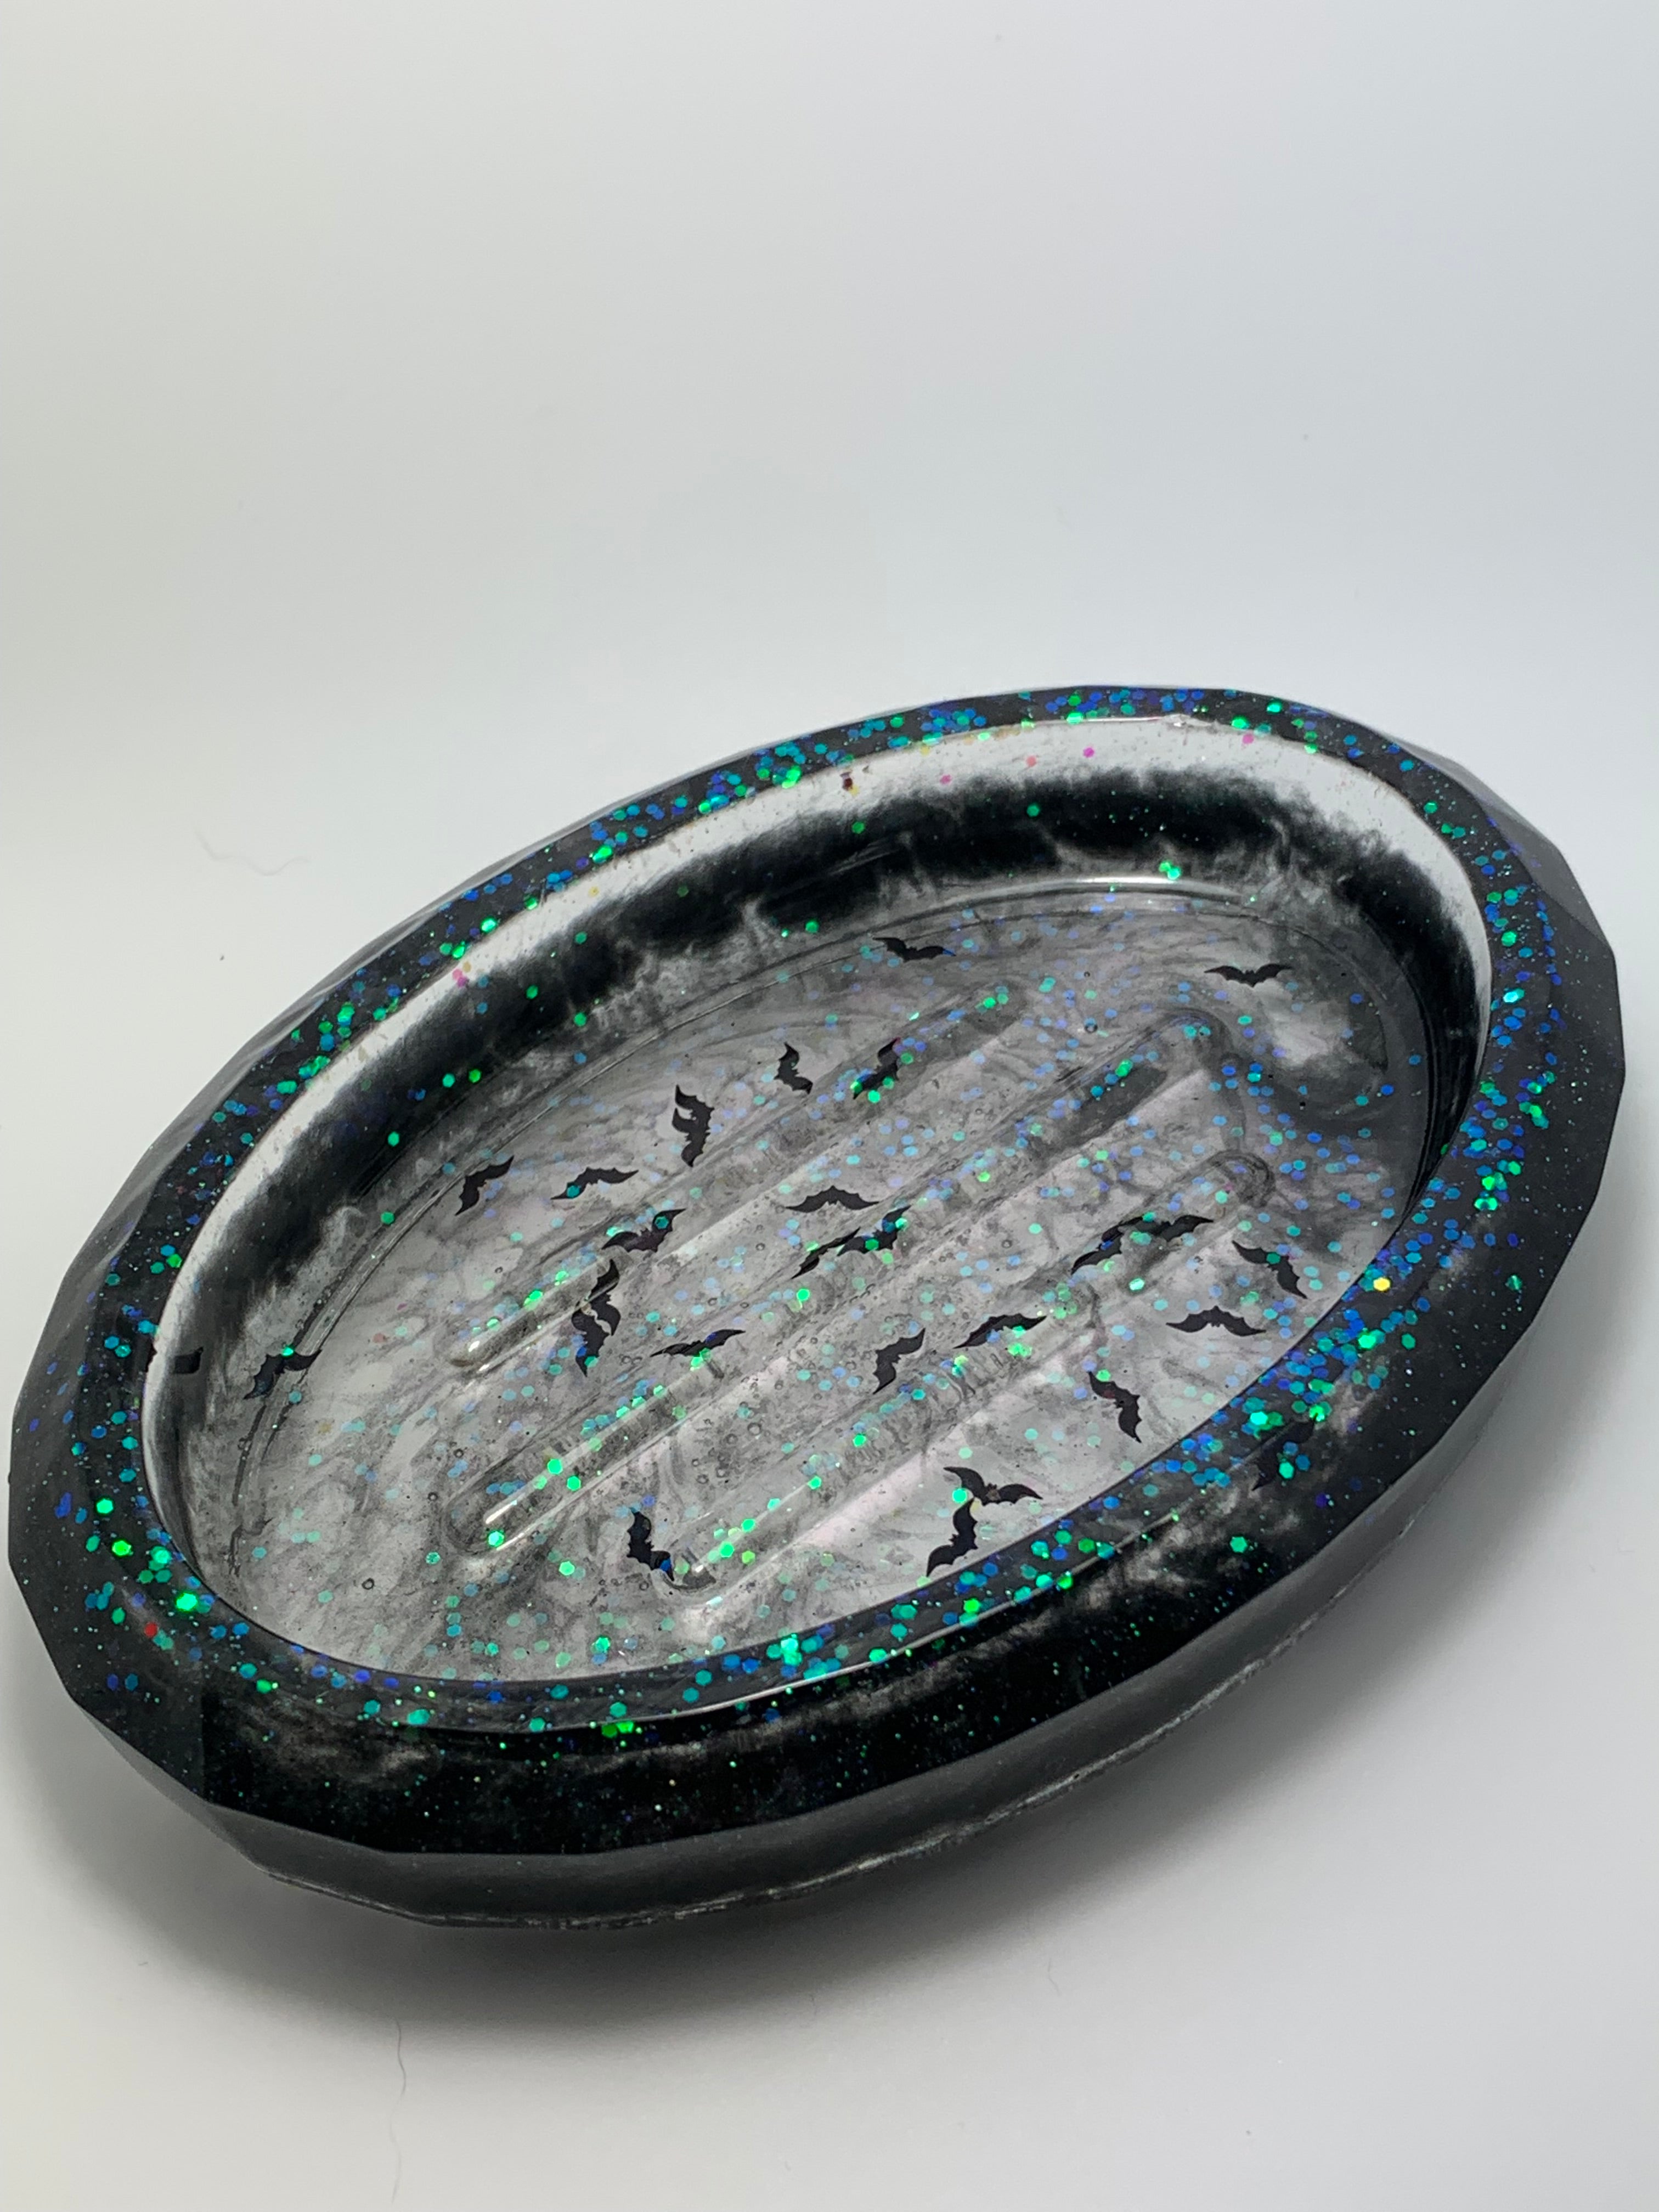 Soap Dish or Trinket Dish - Smokey Swirls with Bats and Holographic Glitter